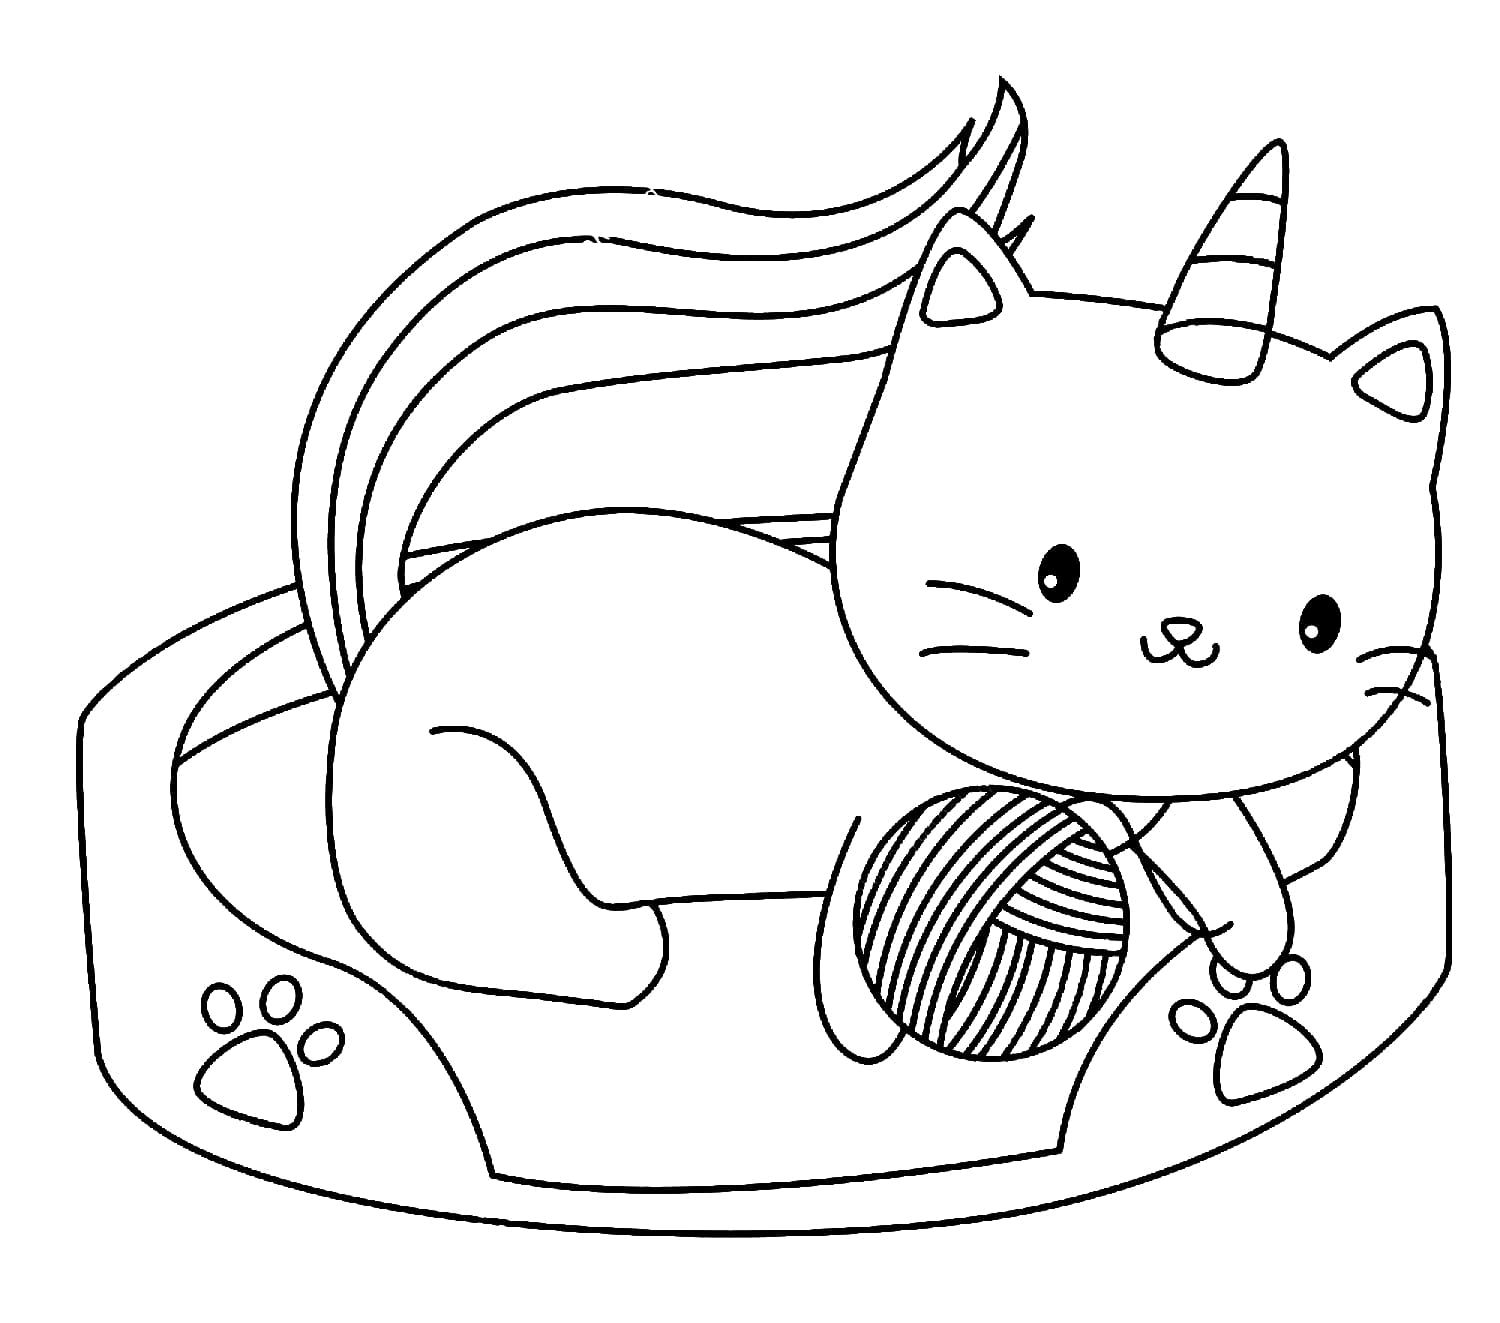 desenhos para colorir kawaii 5  Pusheen coloring pages, Cat coloring page,  Kitty coloring